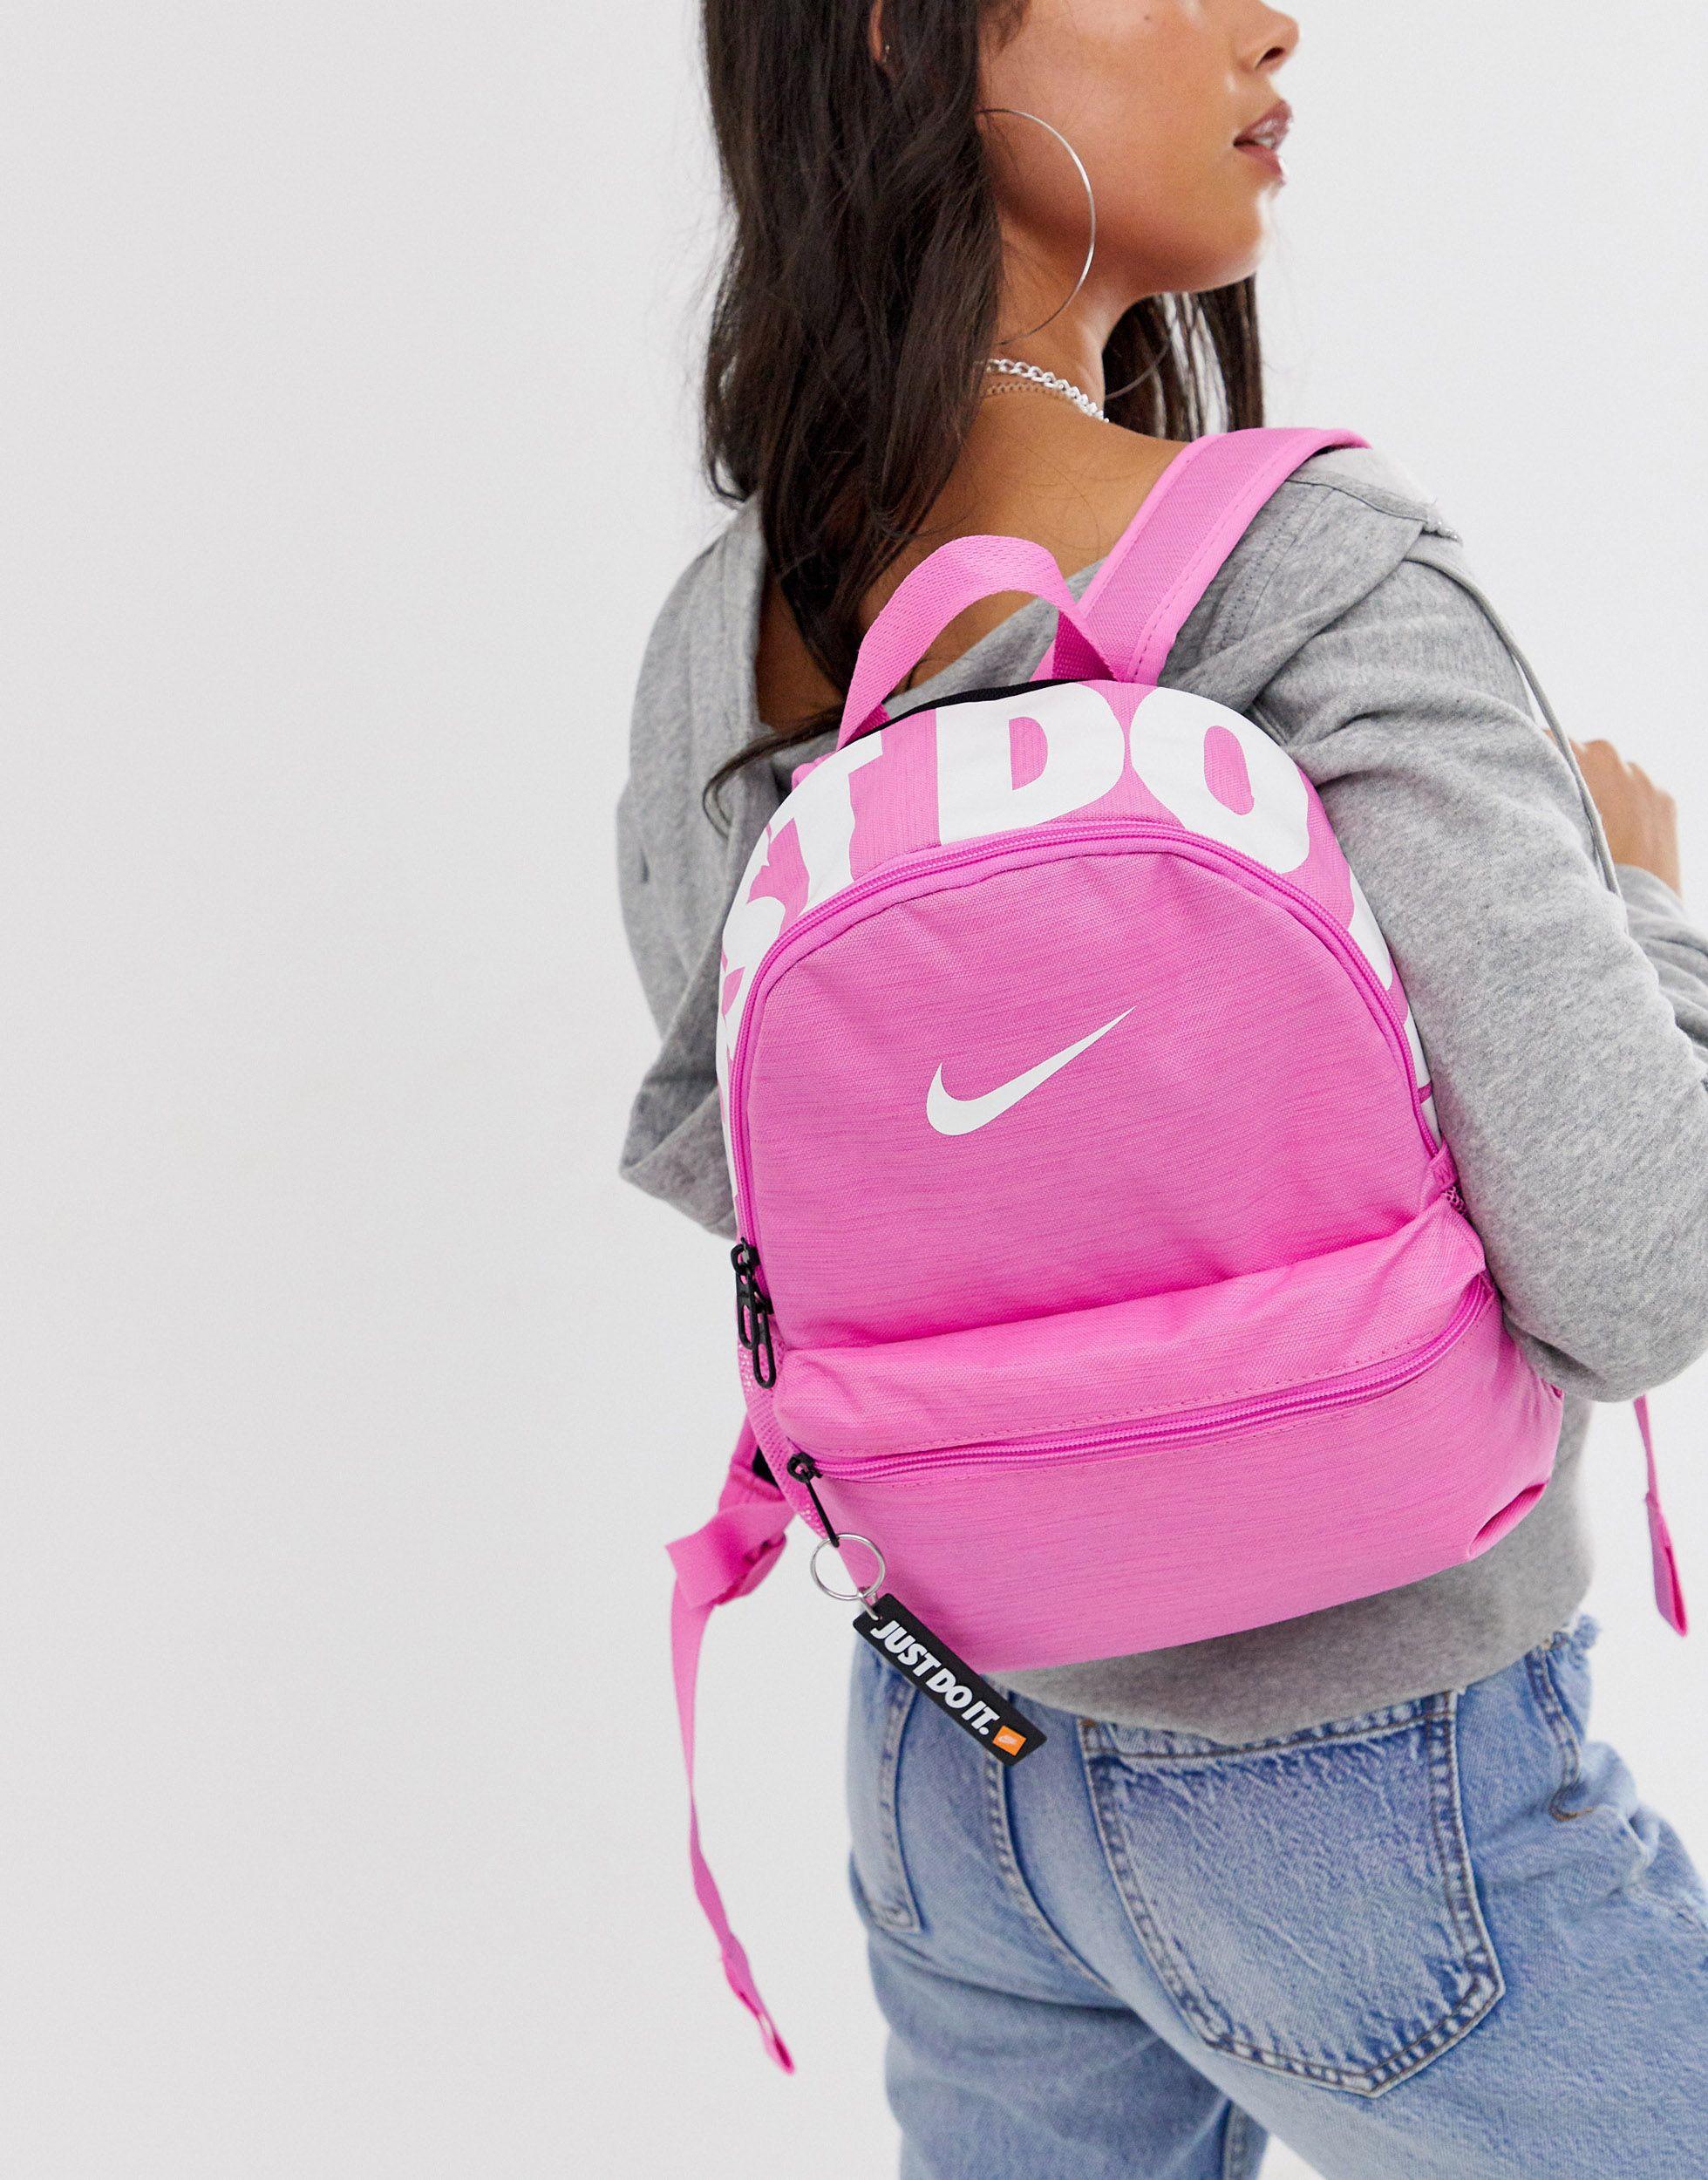 Mochila pequeña en rosa Just Do It Nike de color Rosa | Lyst